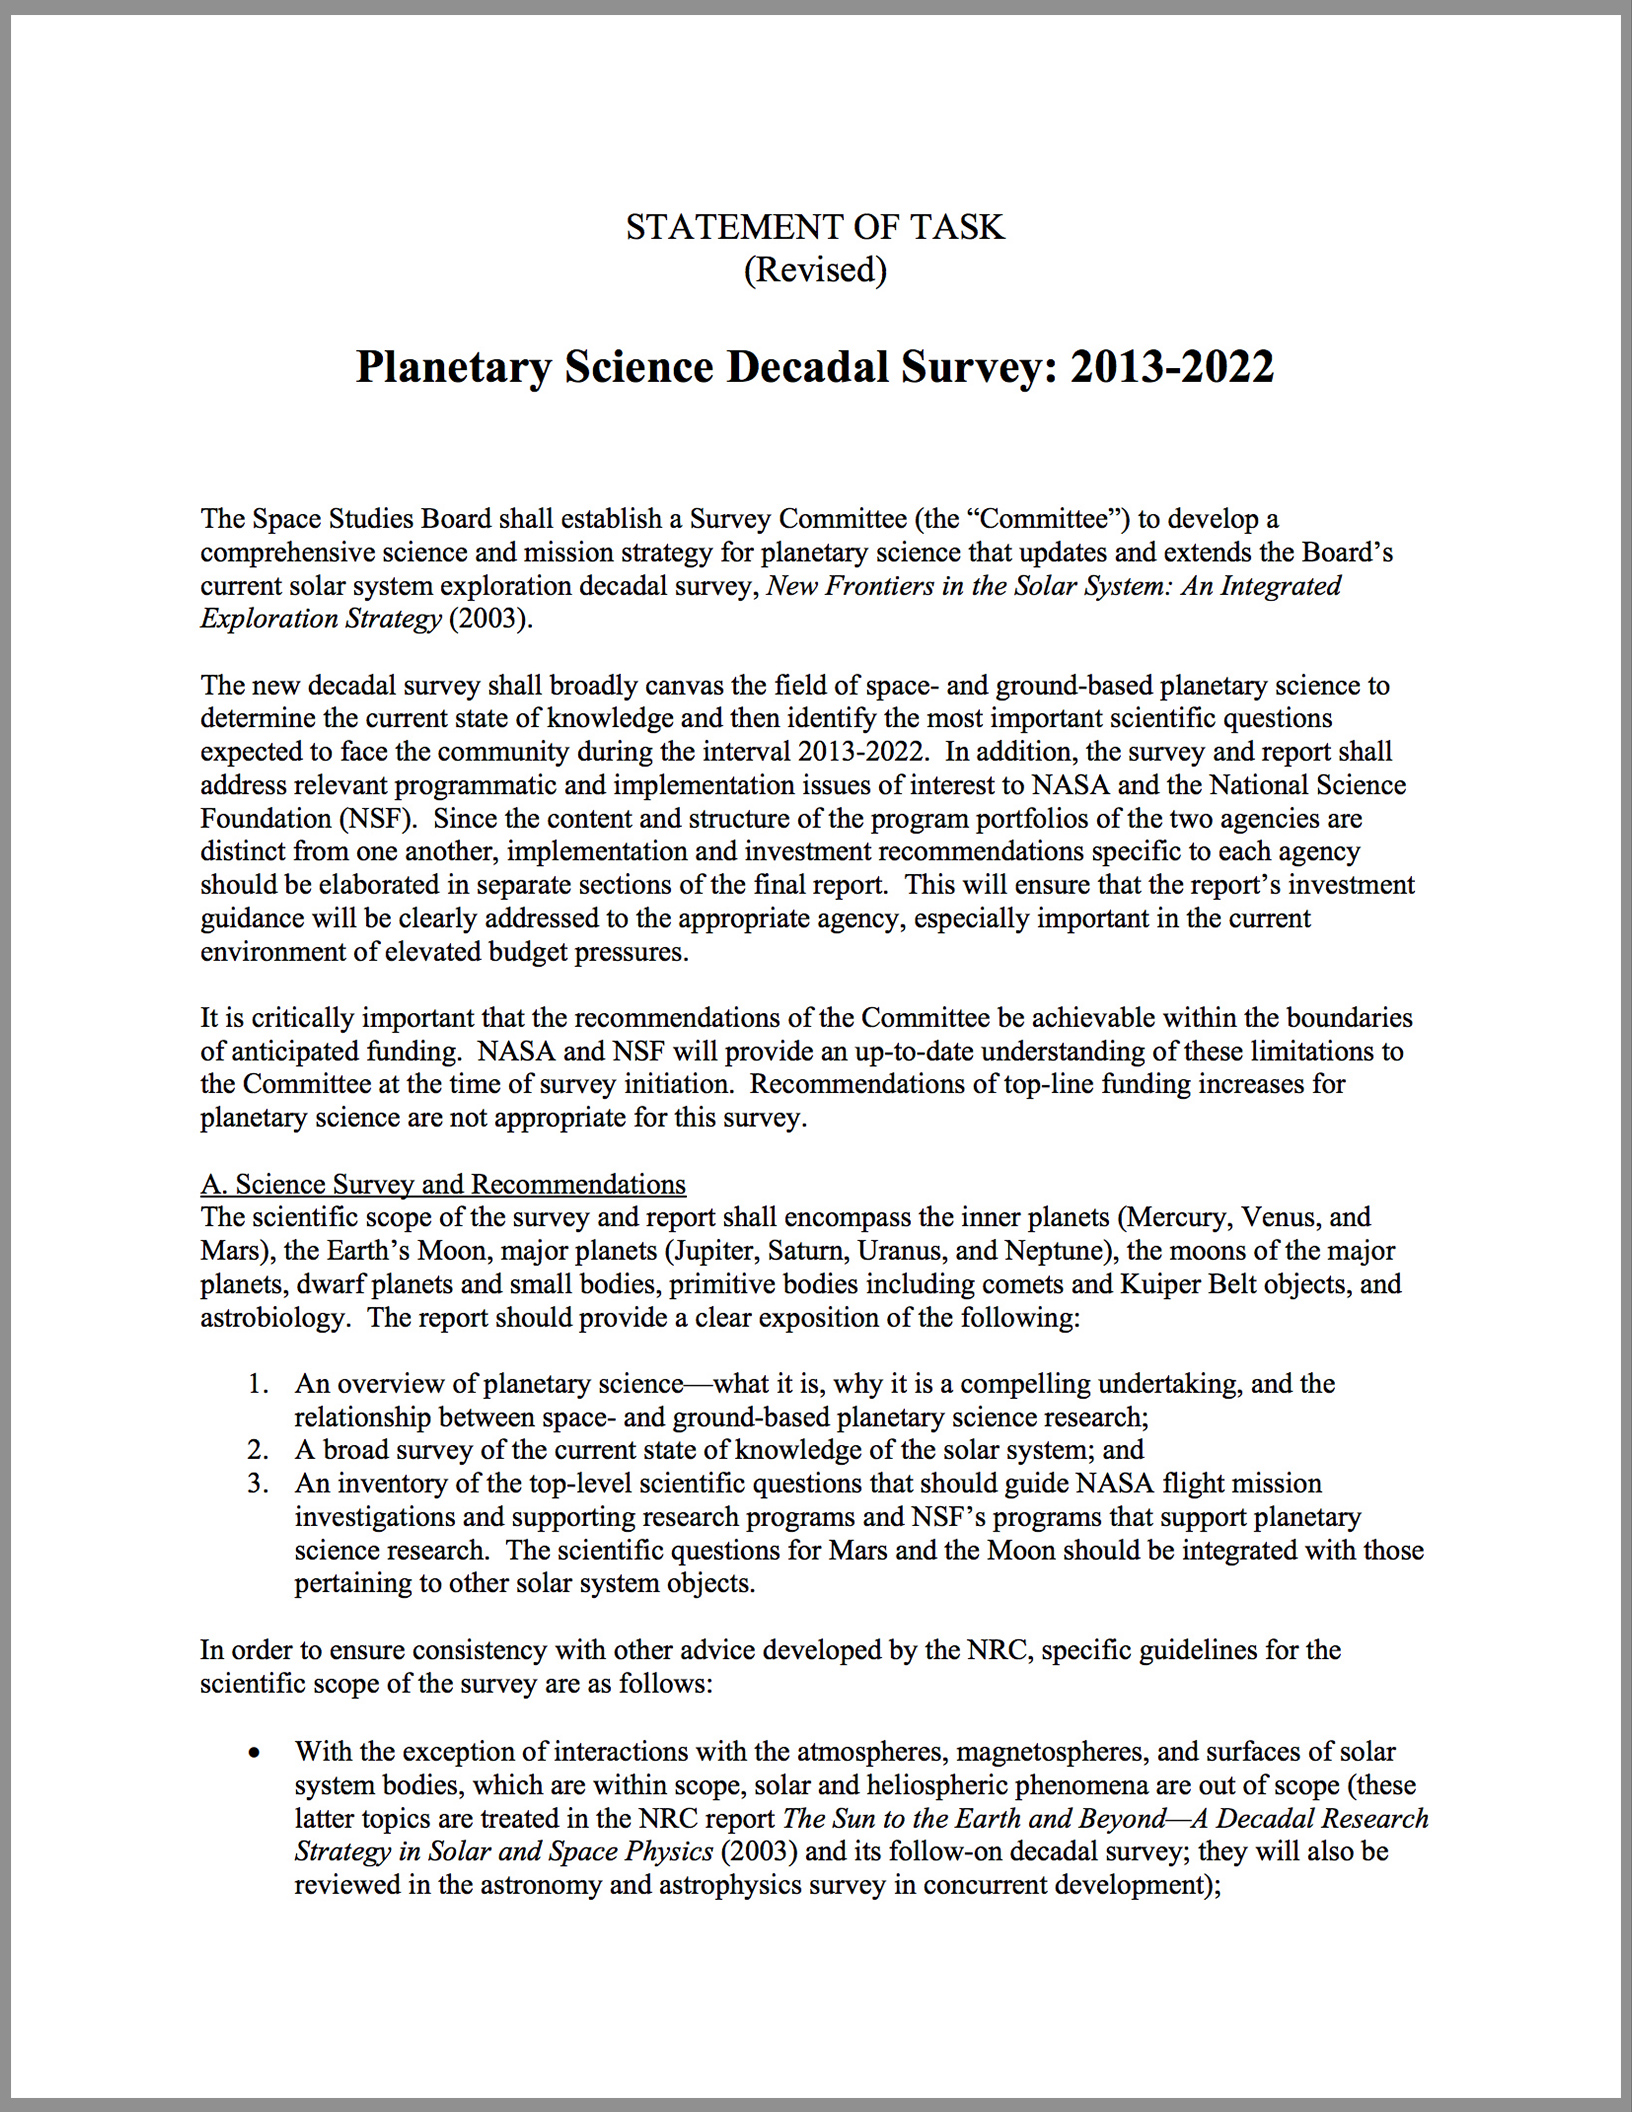 Planetary Science Decadal Survey: 2013-2022